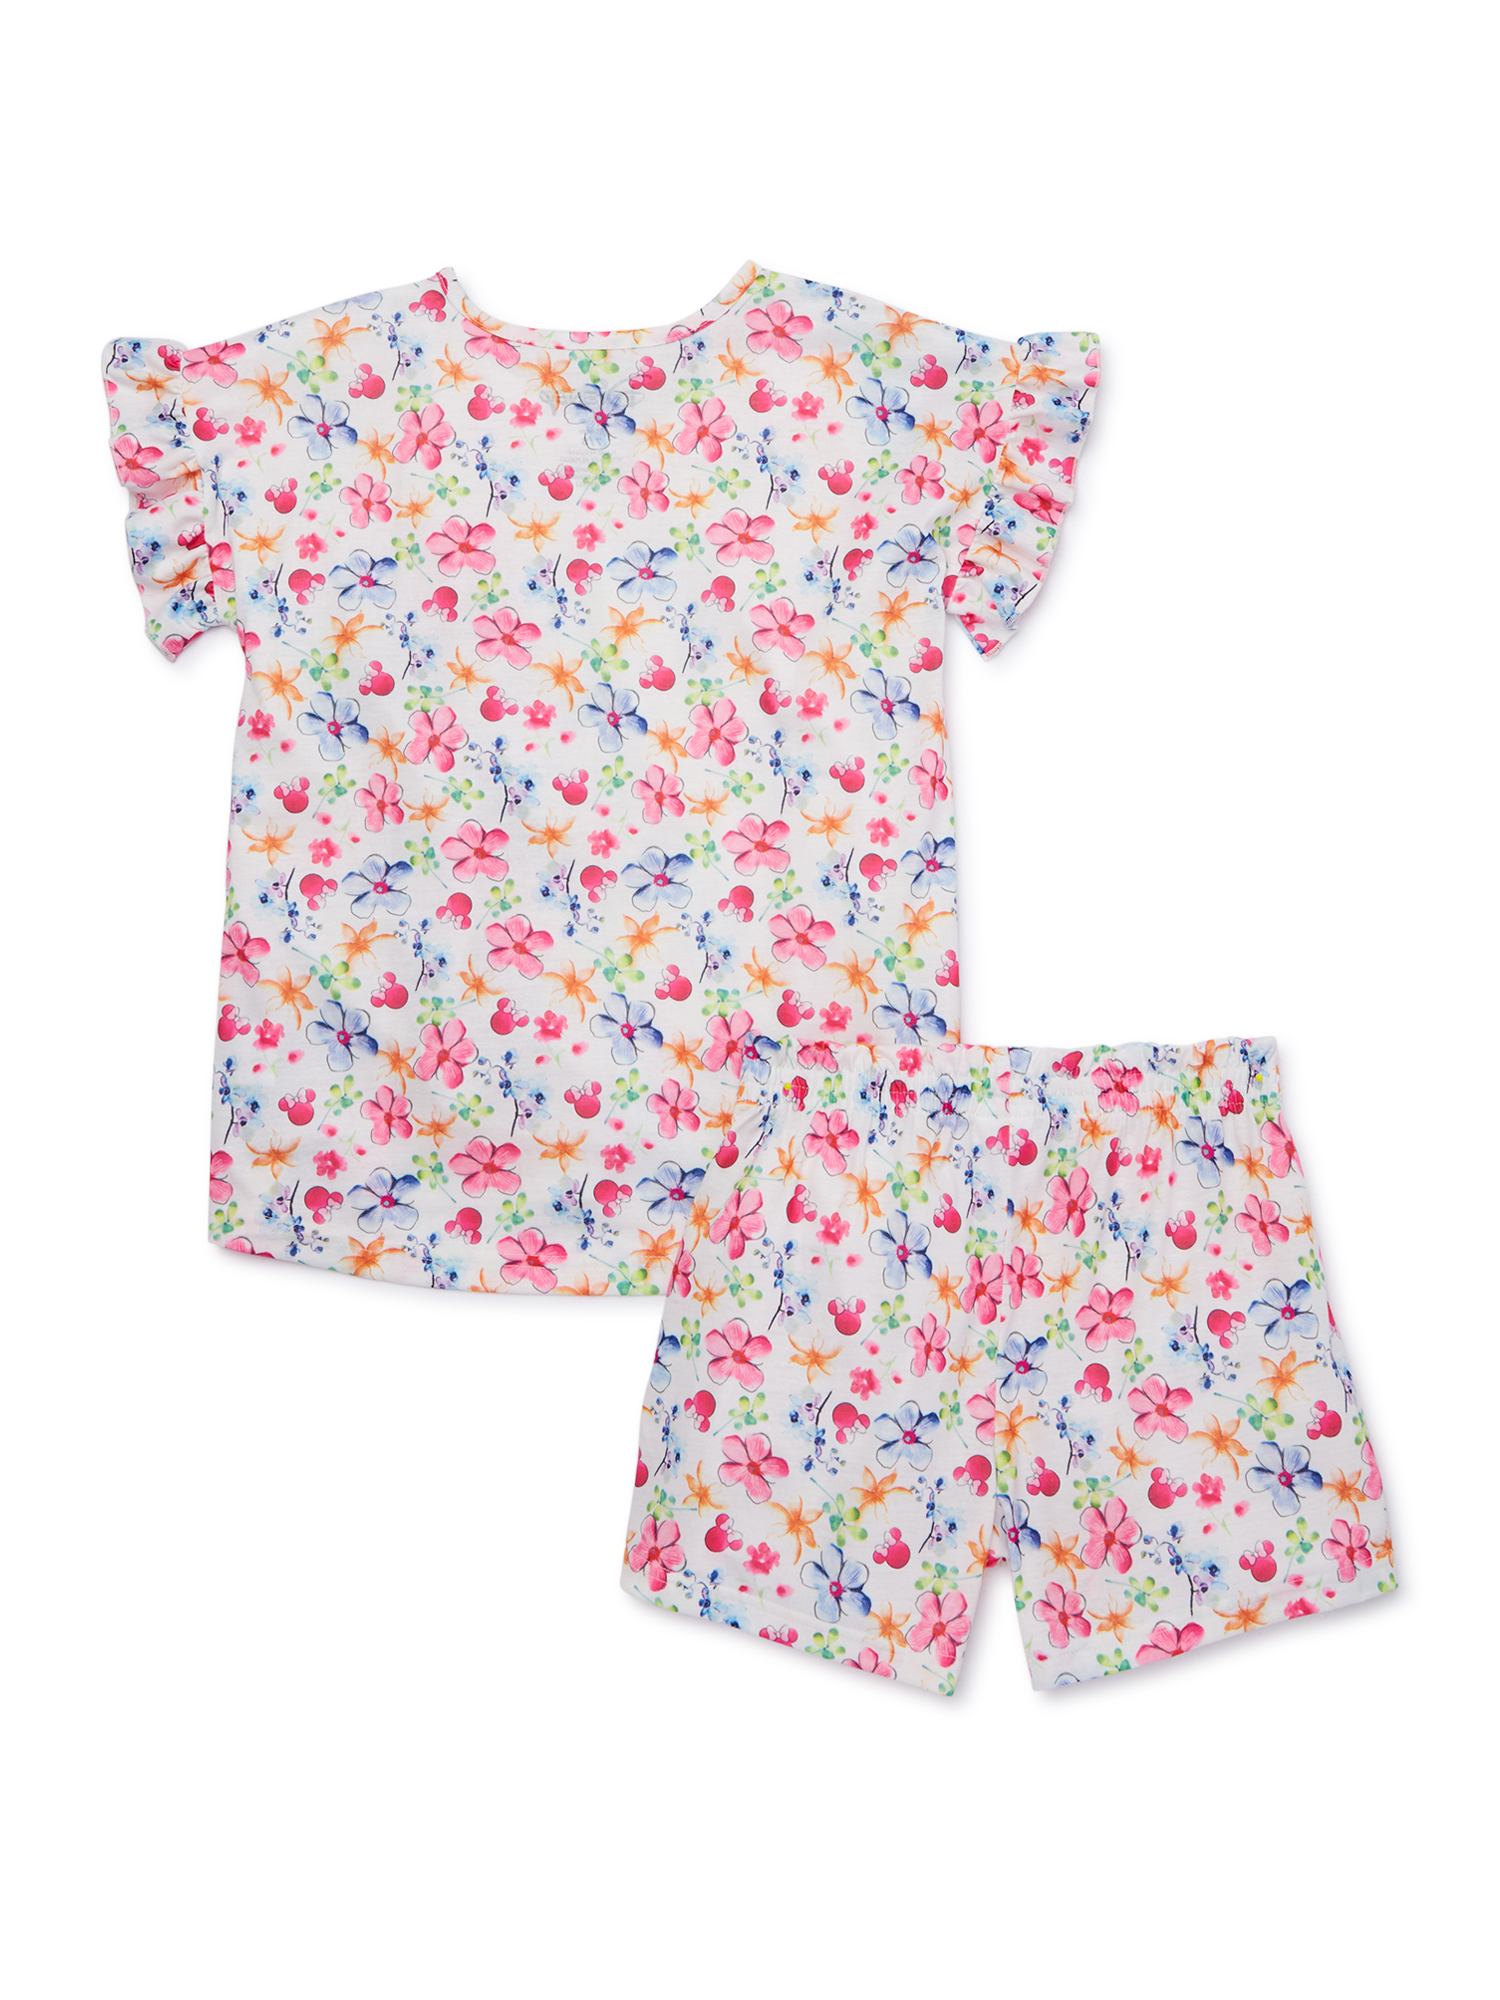 Disney Minnie Mouse Girls 4-12 Exclusive Short Sleeve Tee & Matching Short Pajama Set - image 2 of 2